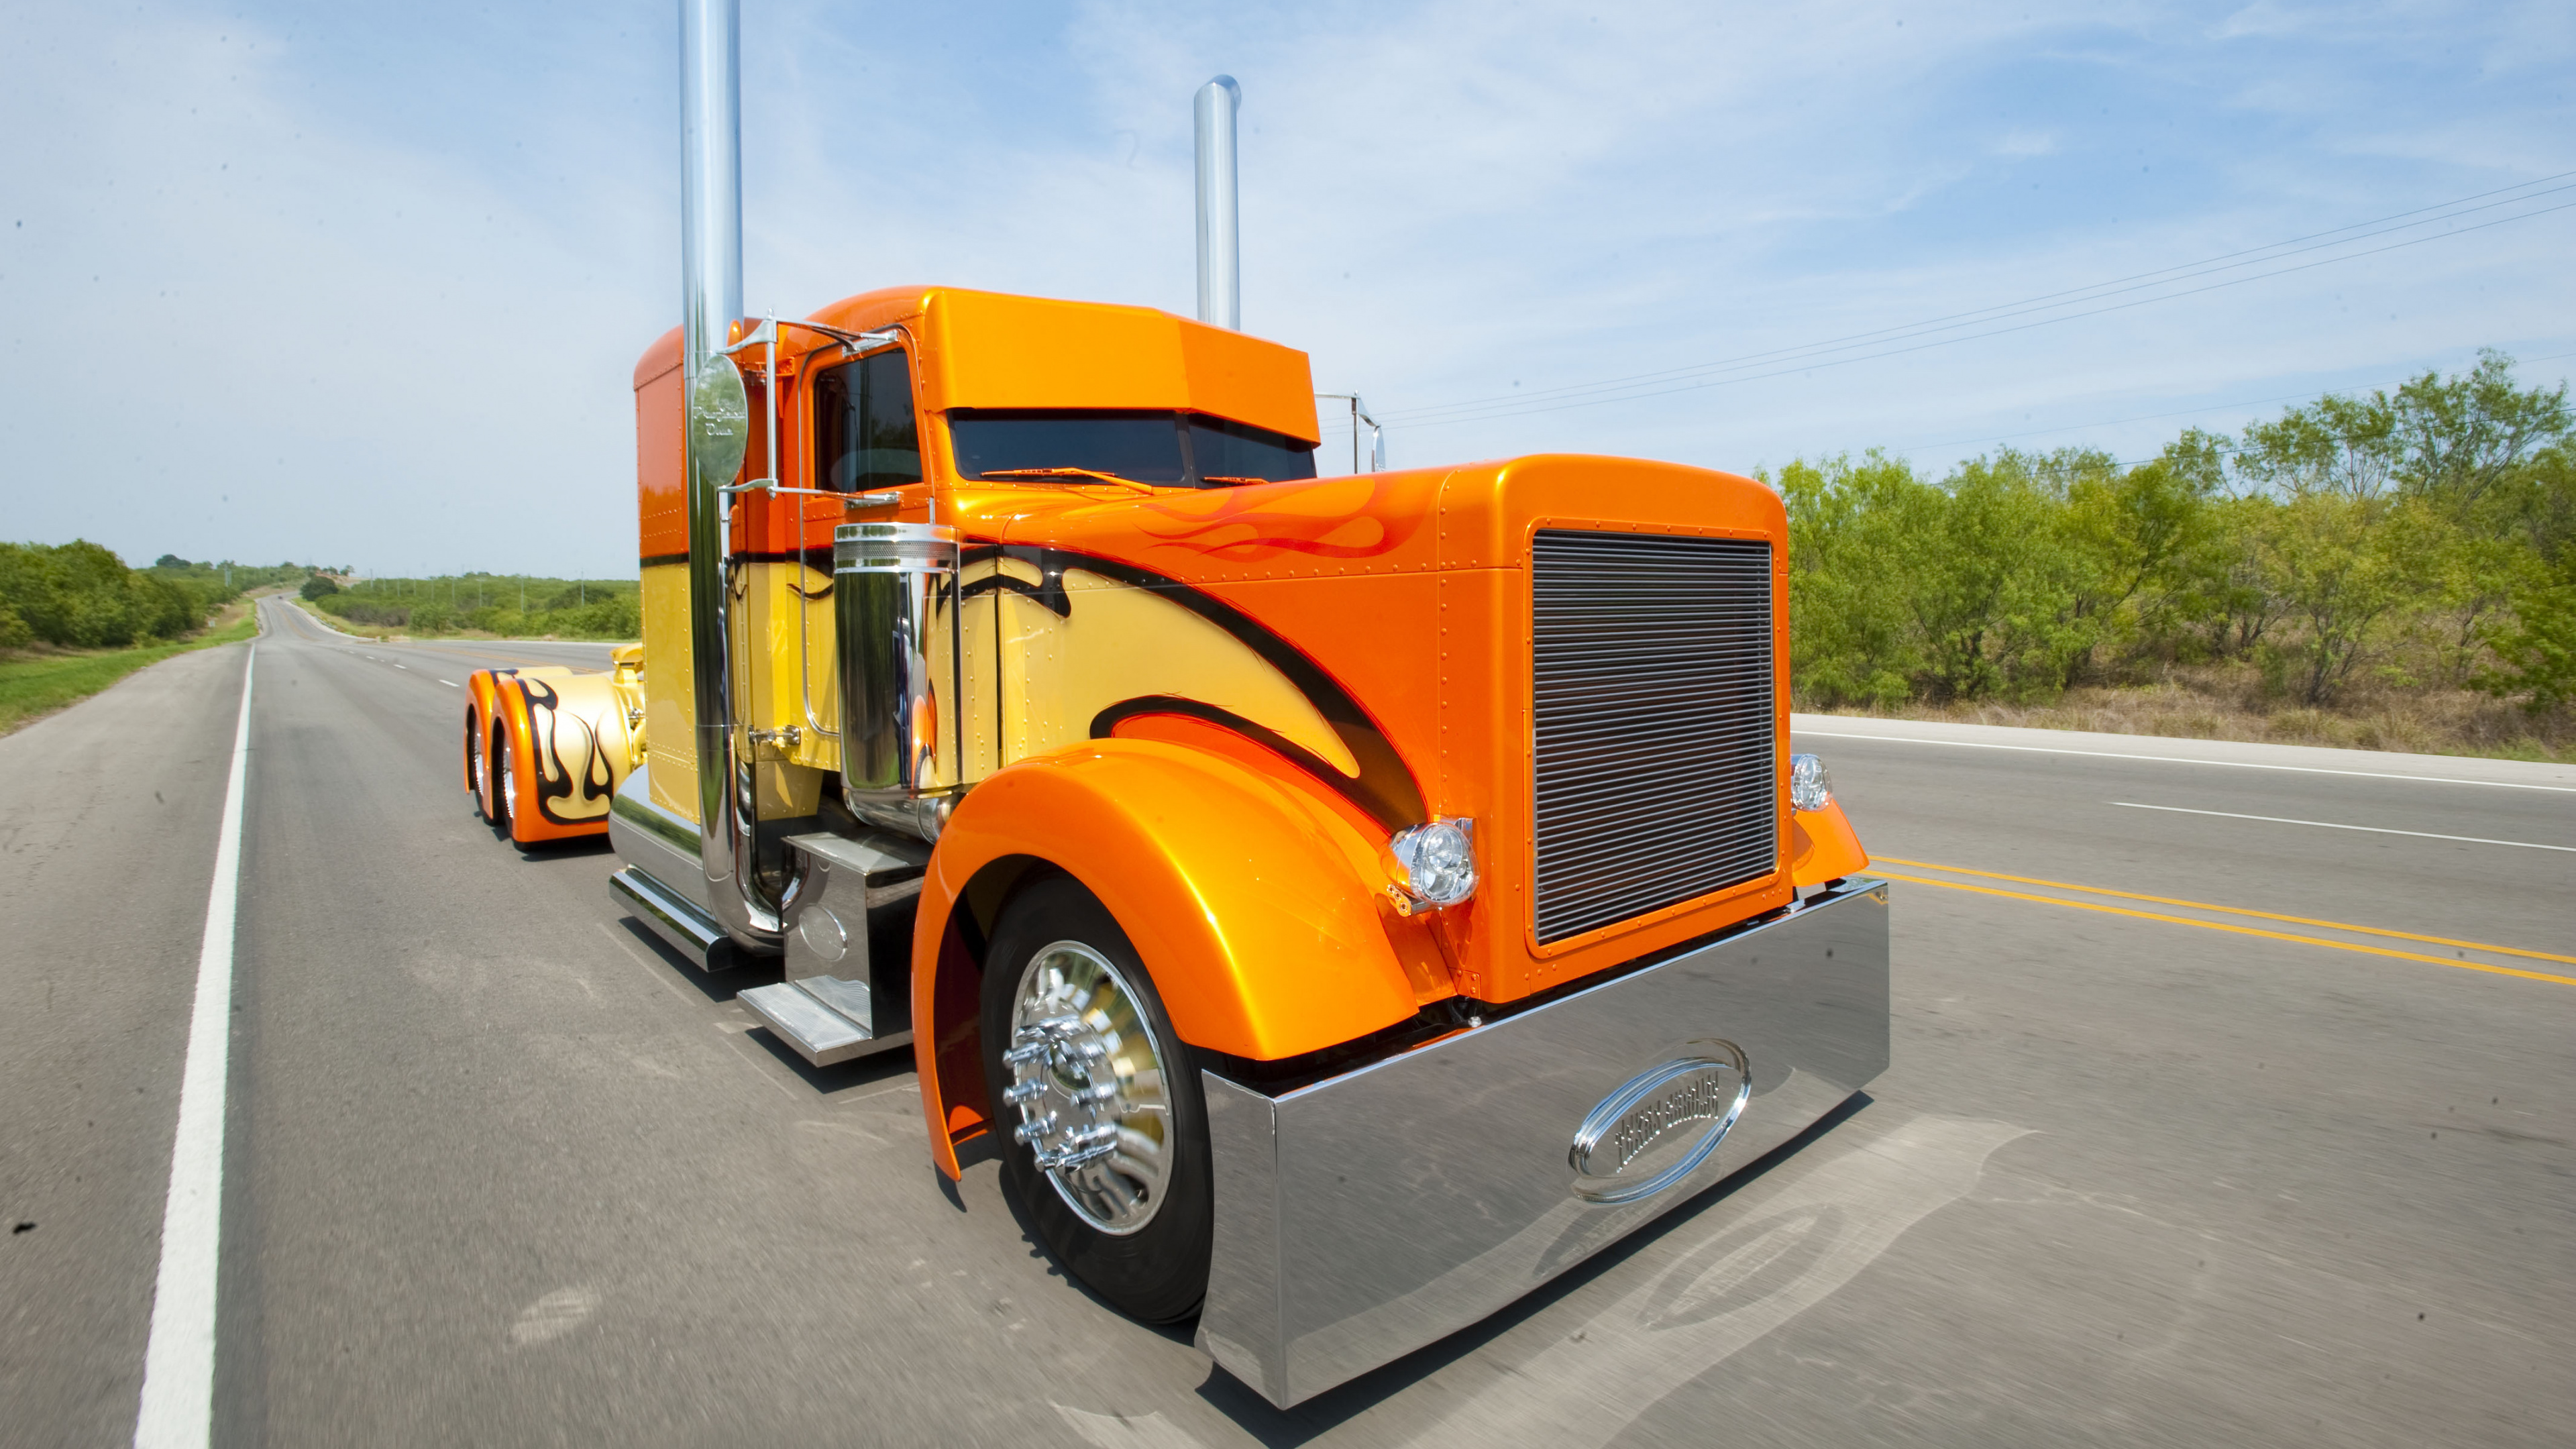 Orange Truck on Road During Daytime. Wallpaper in 3840x2160 Resolution